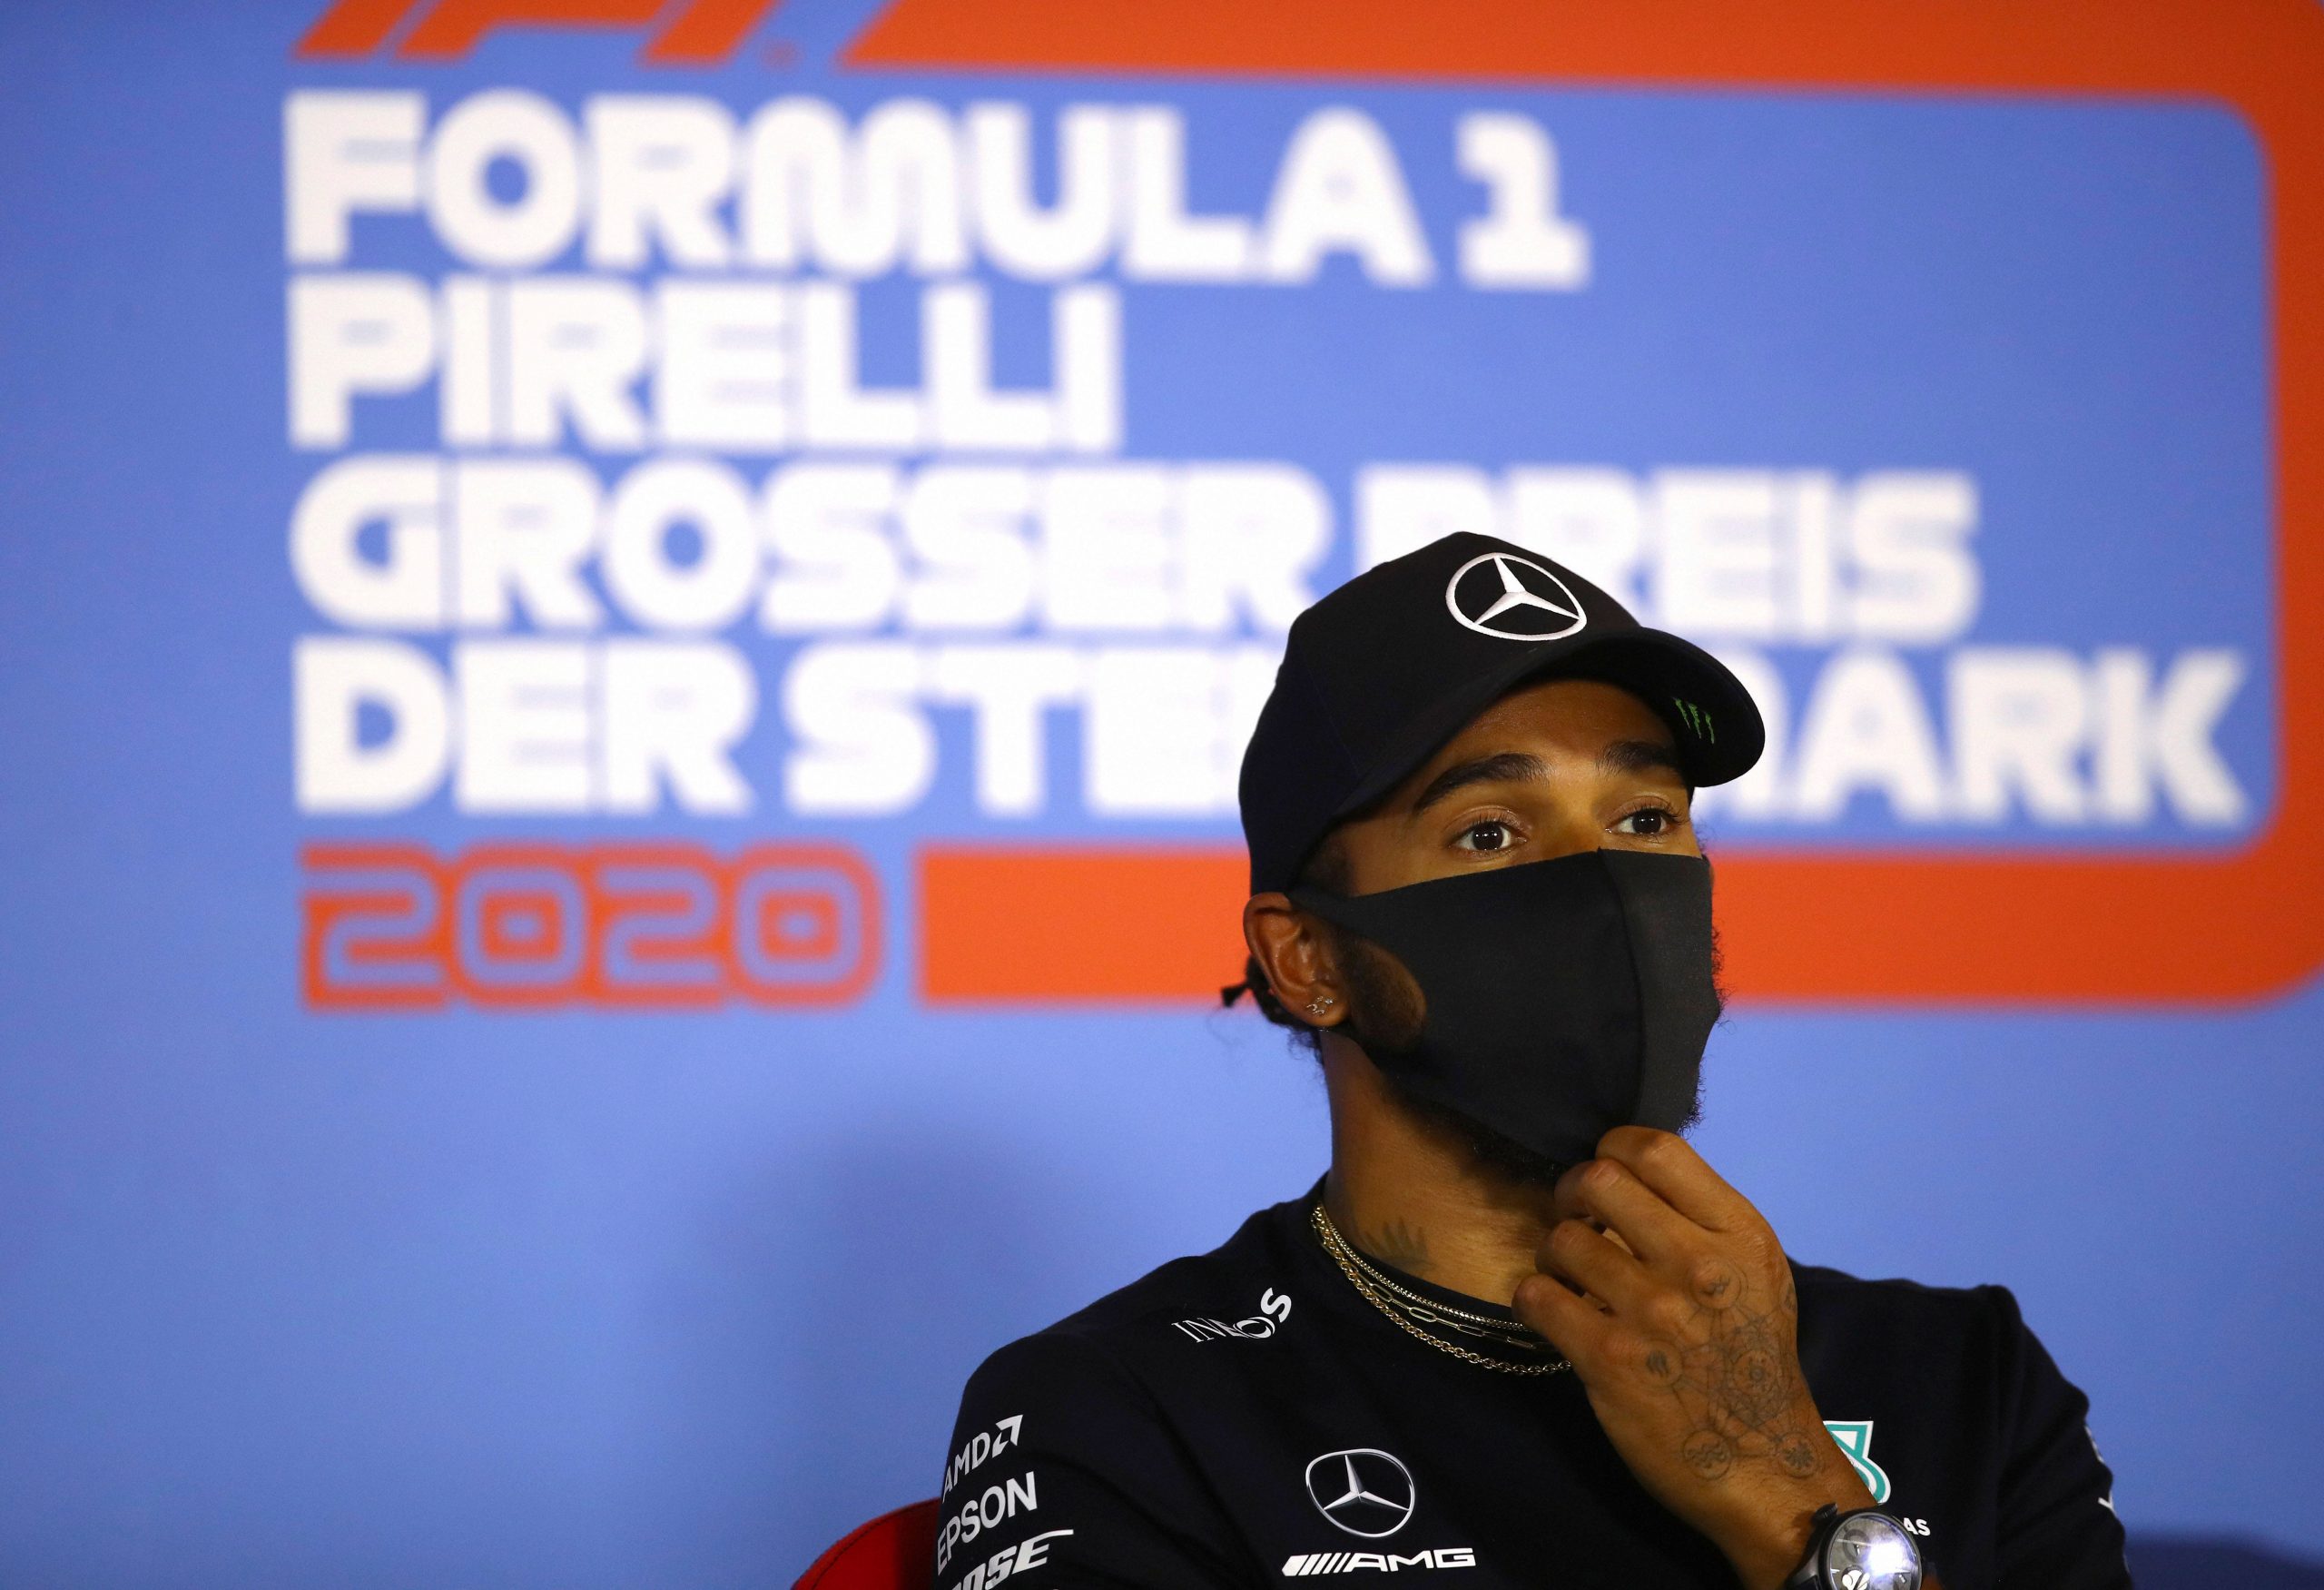 Lewis Hamilton wants racing records, racial justice ahead of Hungarian GP